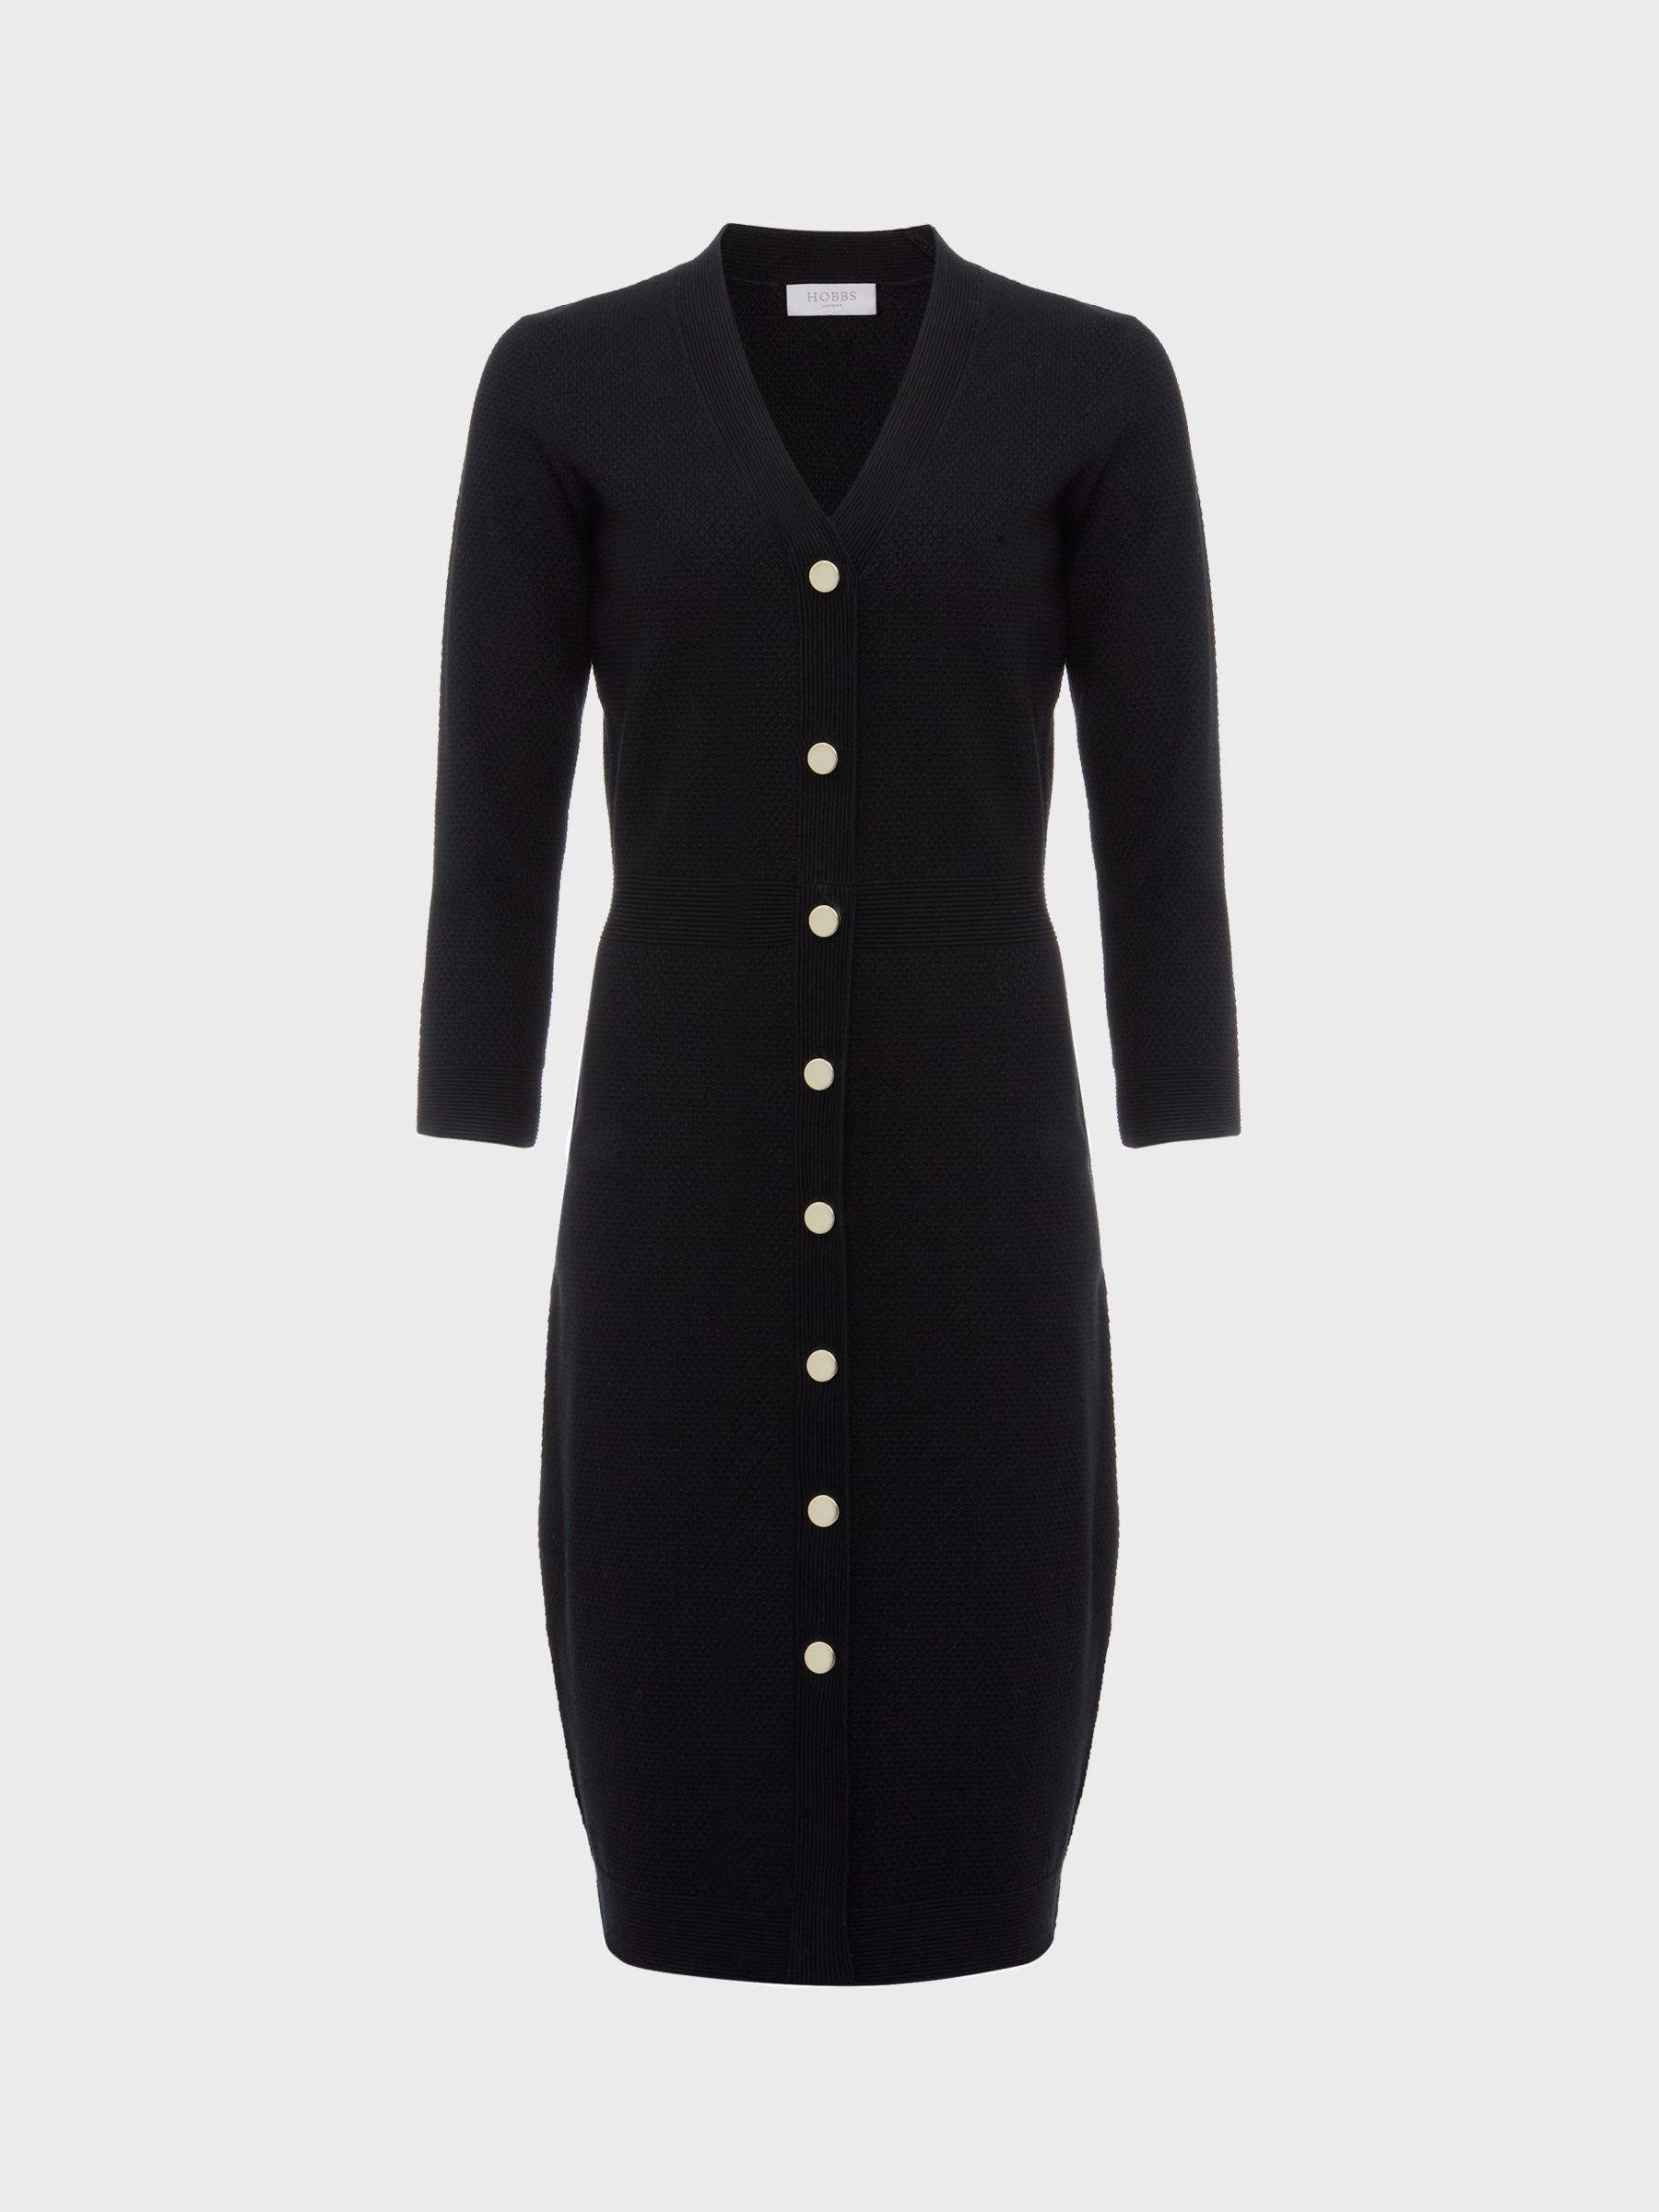 Hobbs Marlee Rib Knit Button Front Dress, Black at John Lewis & Partners